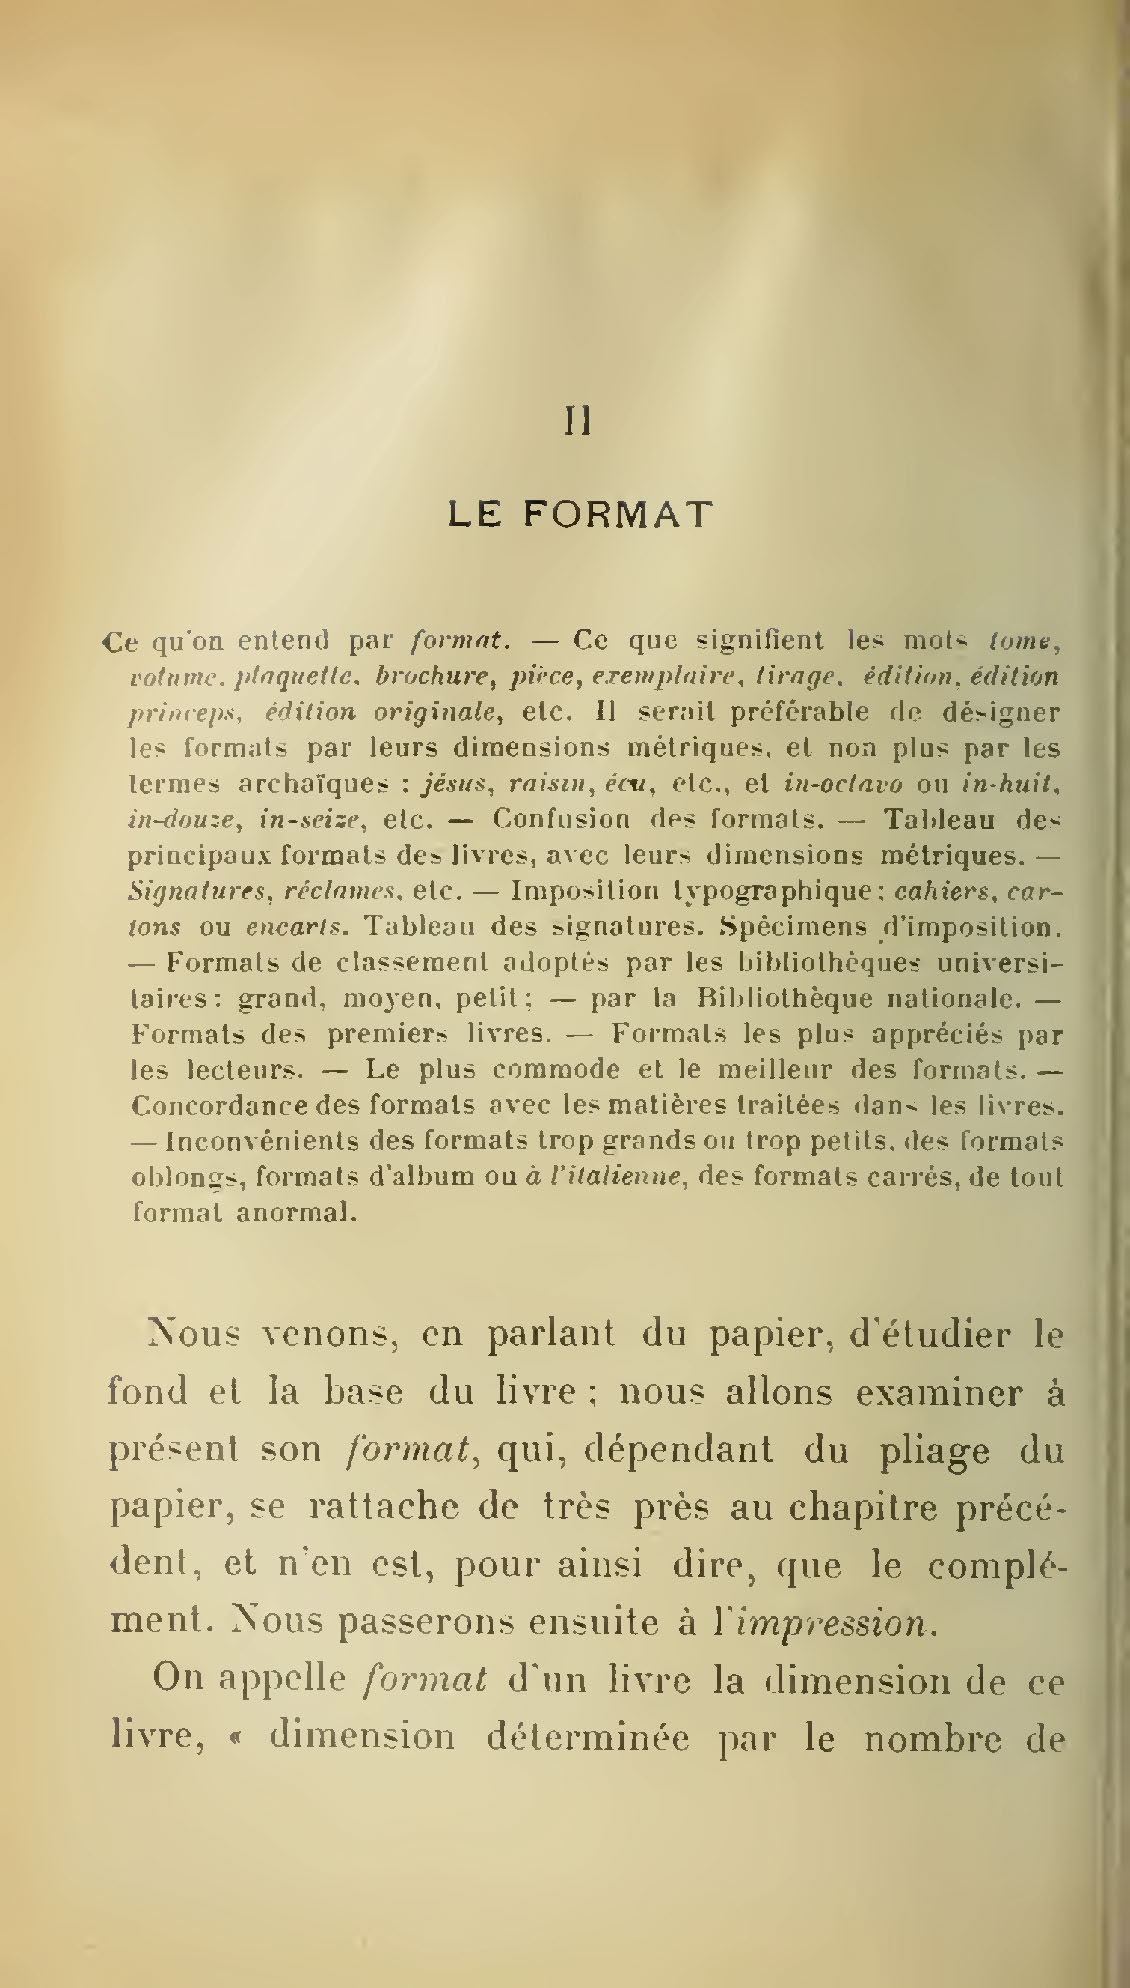 Albert Cim, Le Livre, t. III, p. 80.